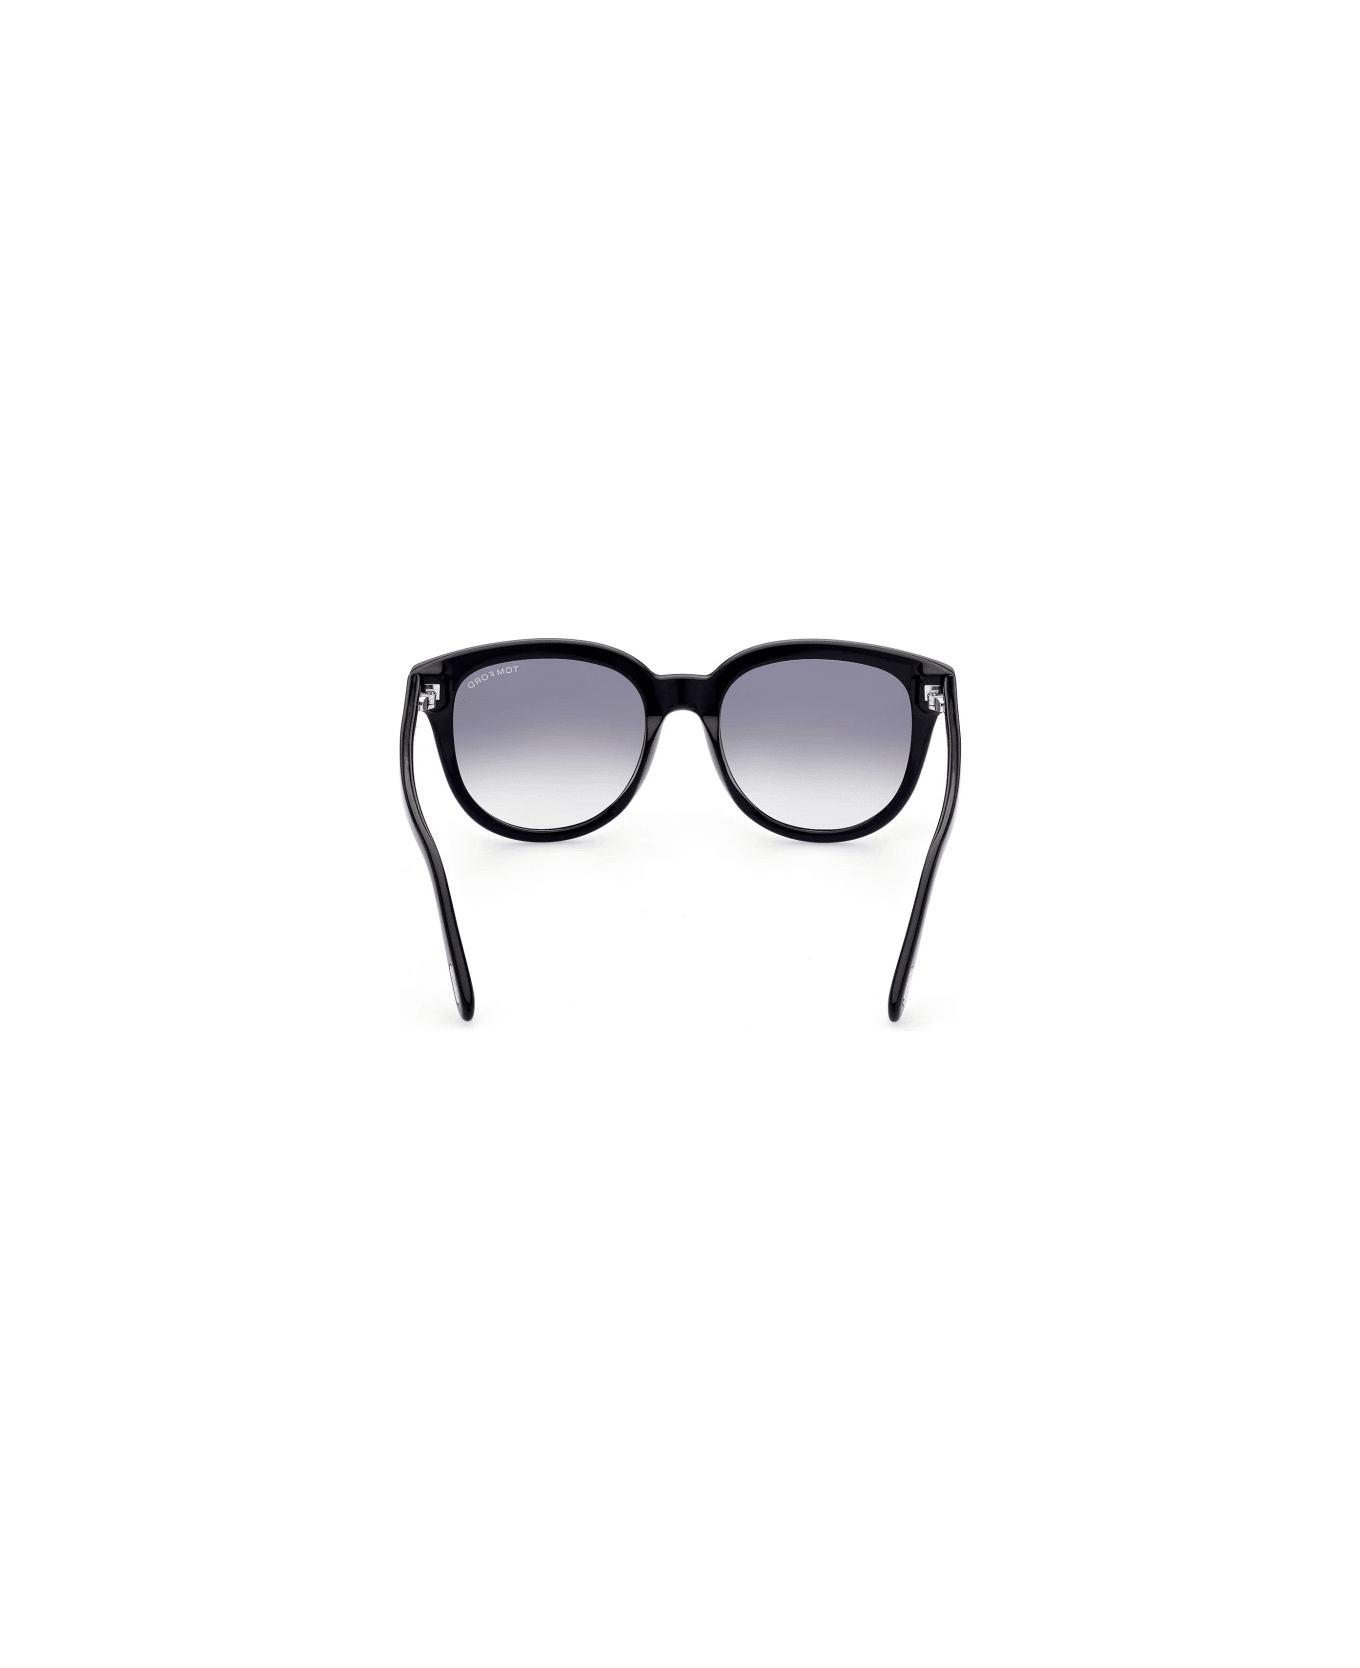 Tom Ford Eyewear TF914 01B Sunglasses サングラス